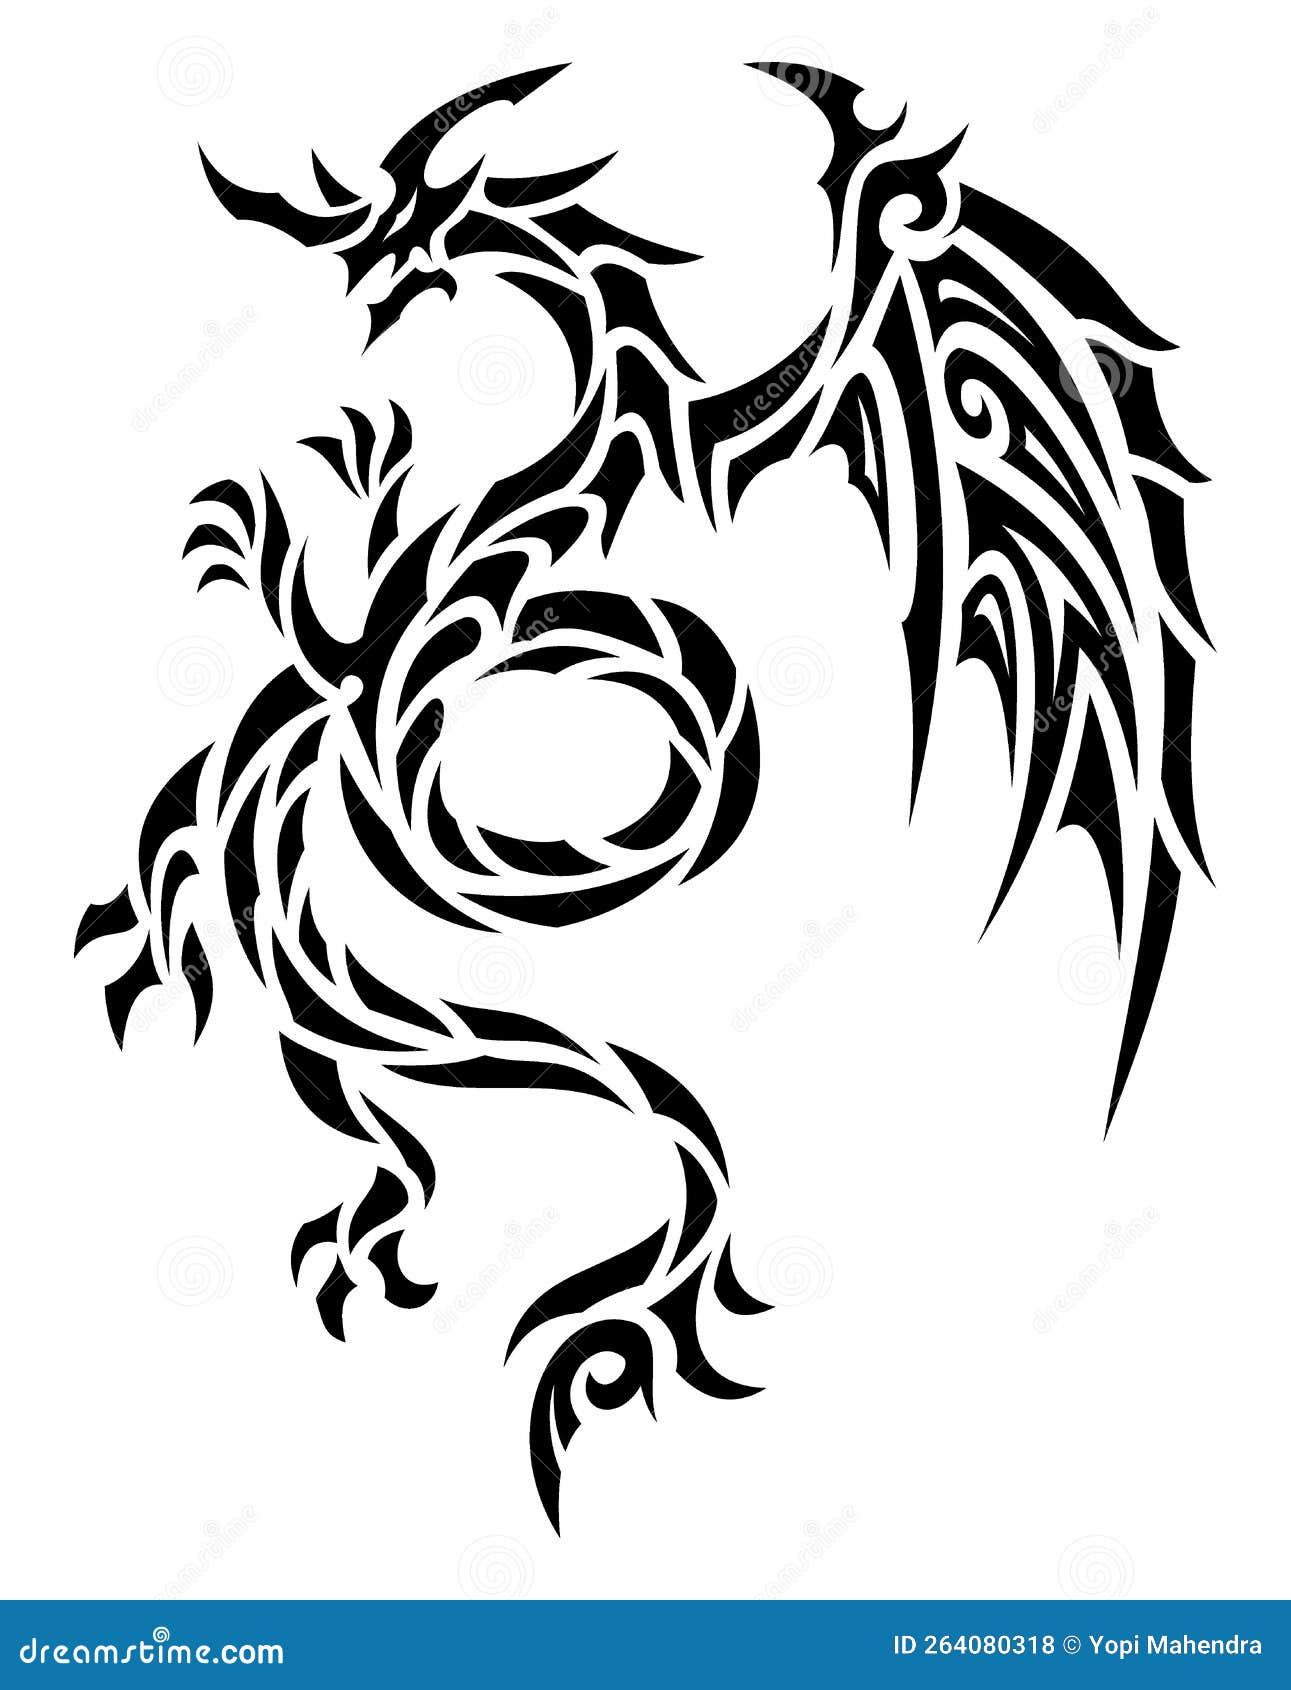 Tribal Dragon Design 3 stock vector. Illustration of calligraphy ...